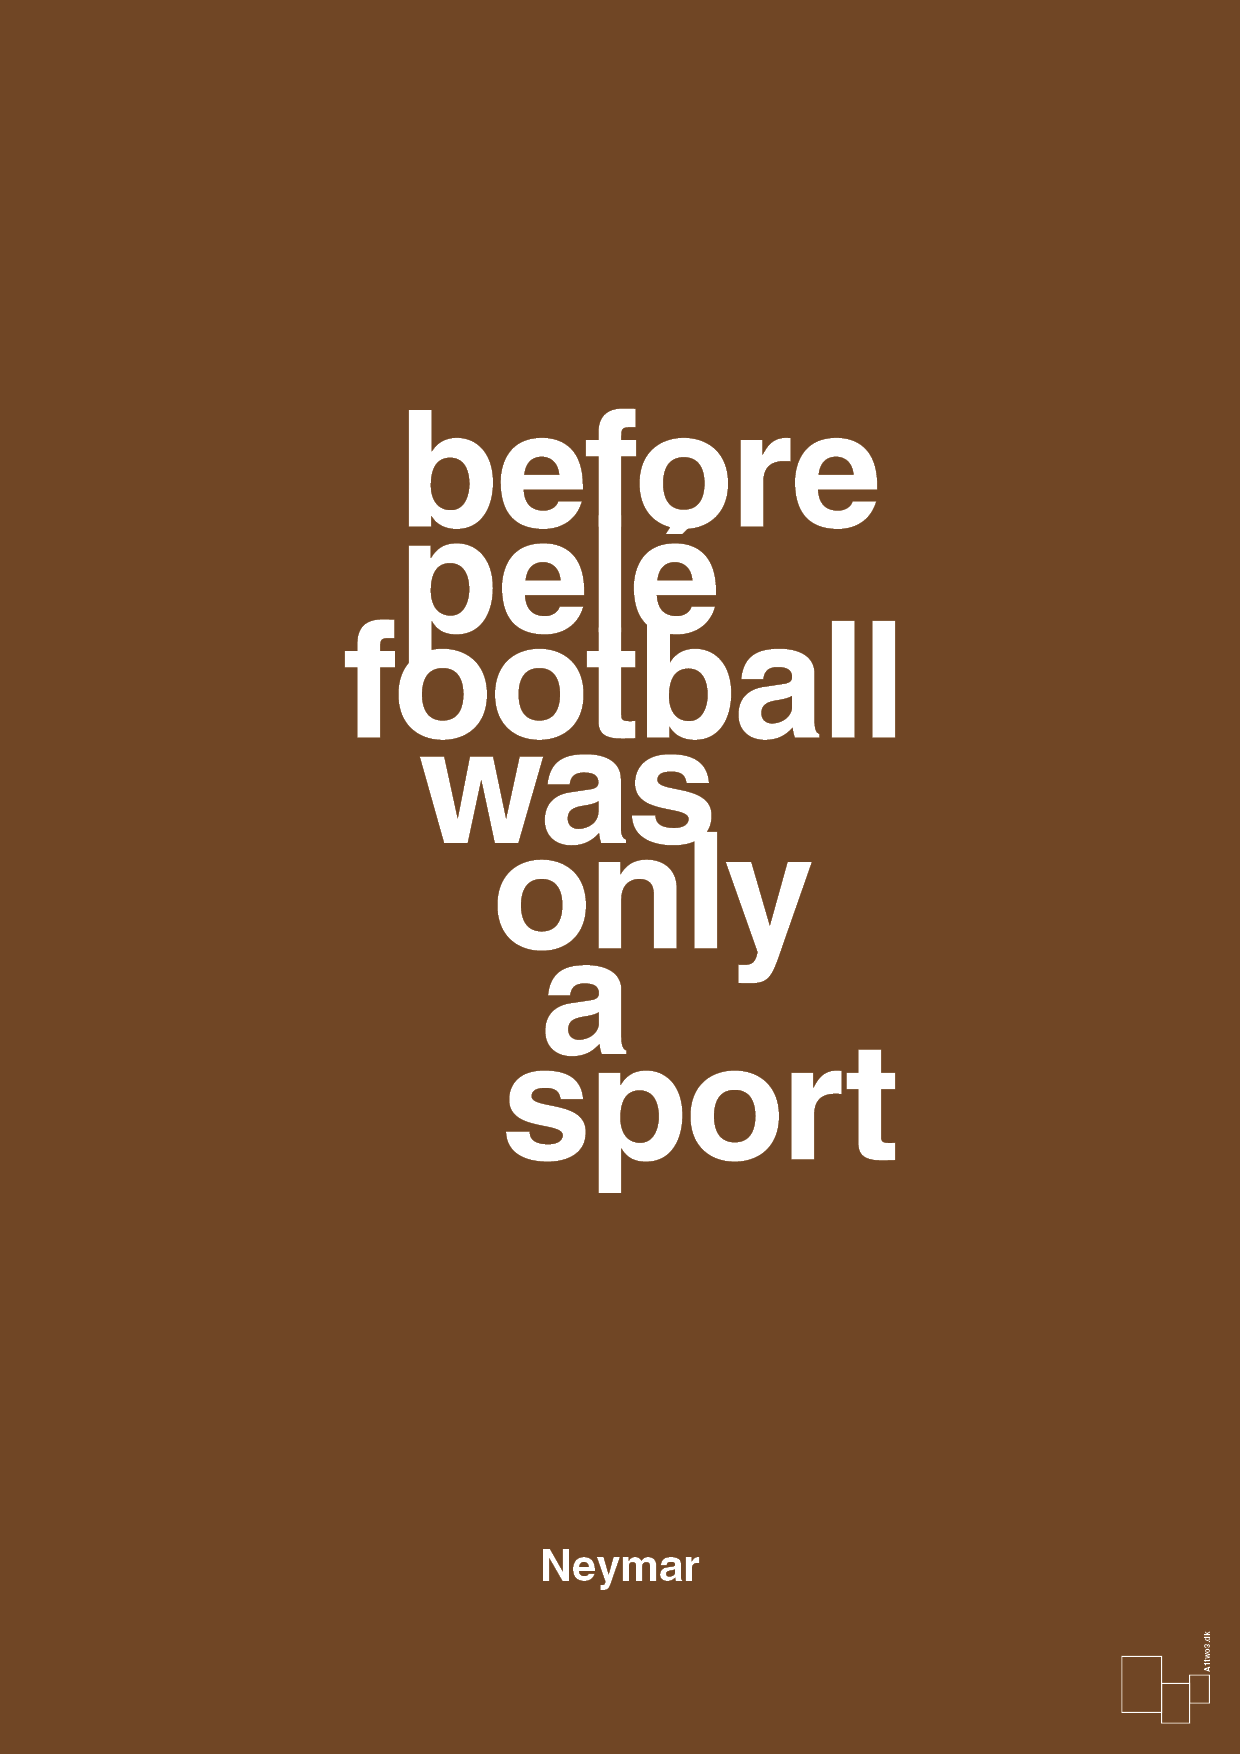 before pelé football was only a sport - Plakat med Citater i Dark Brown